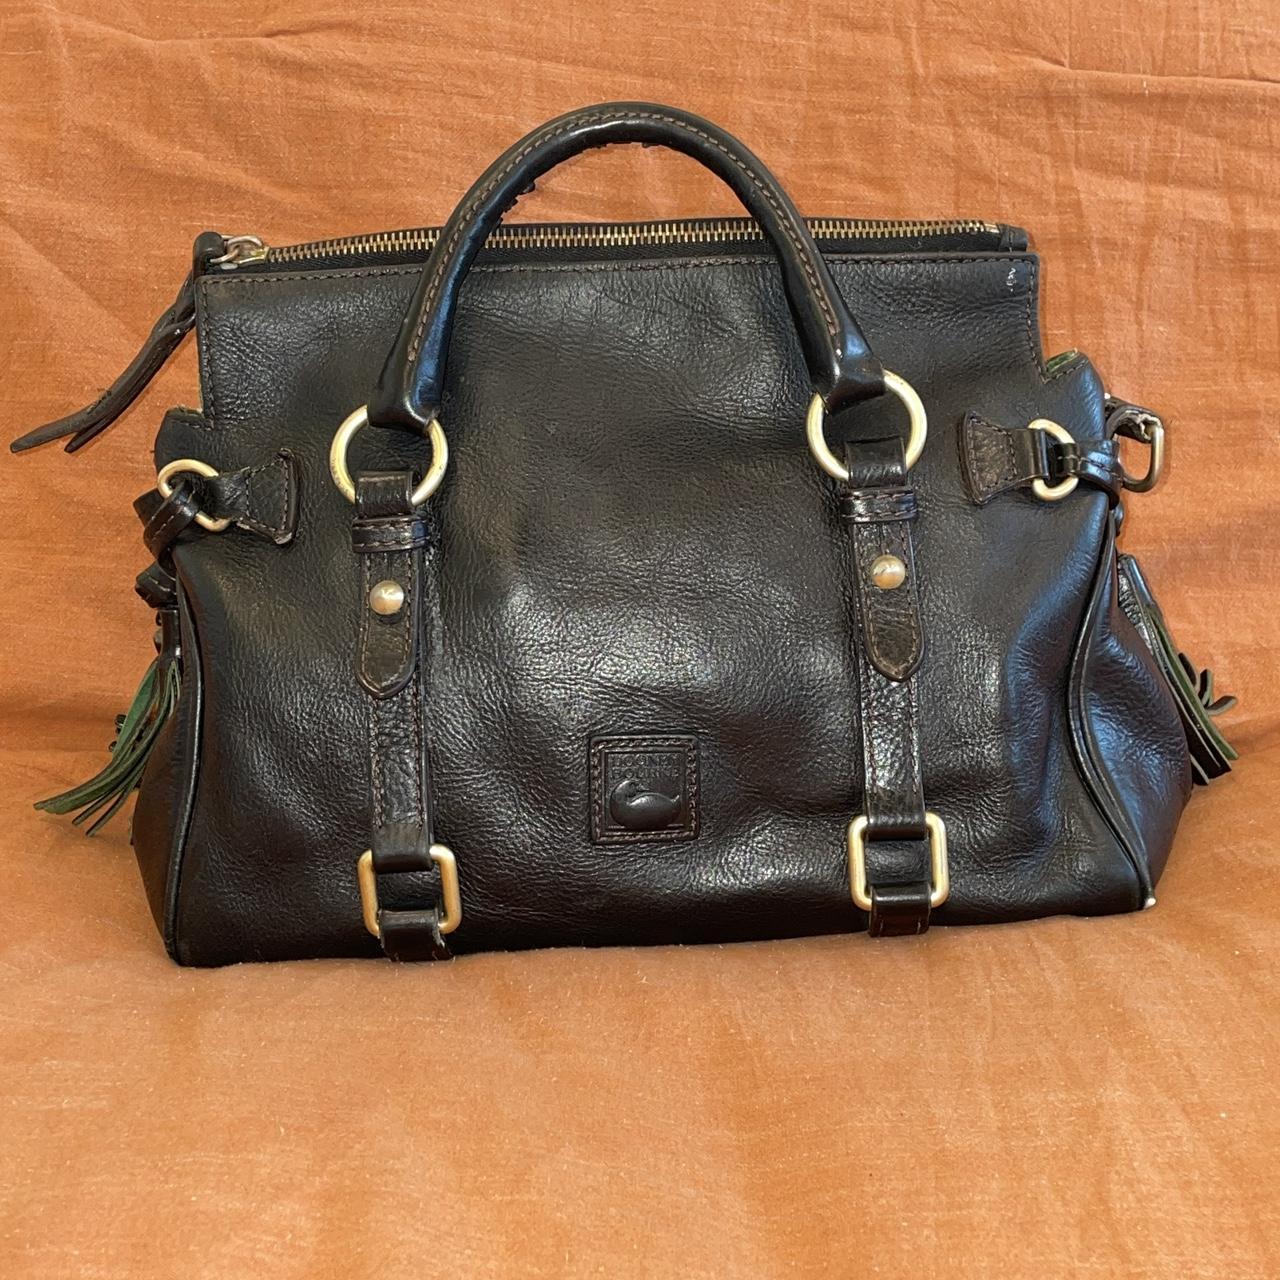 Vintage Italian Handbag and Shoulder Strap in Black and Brown 